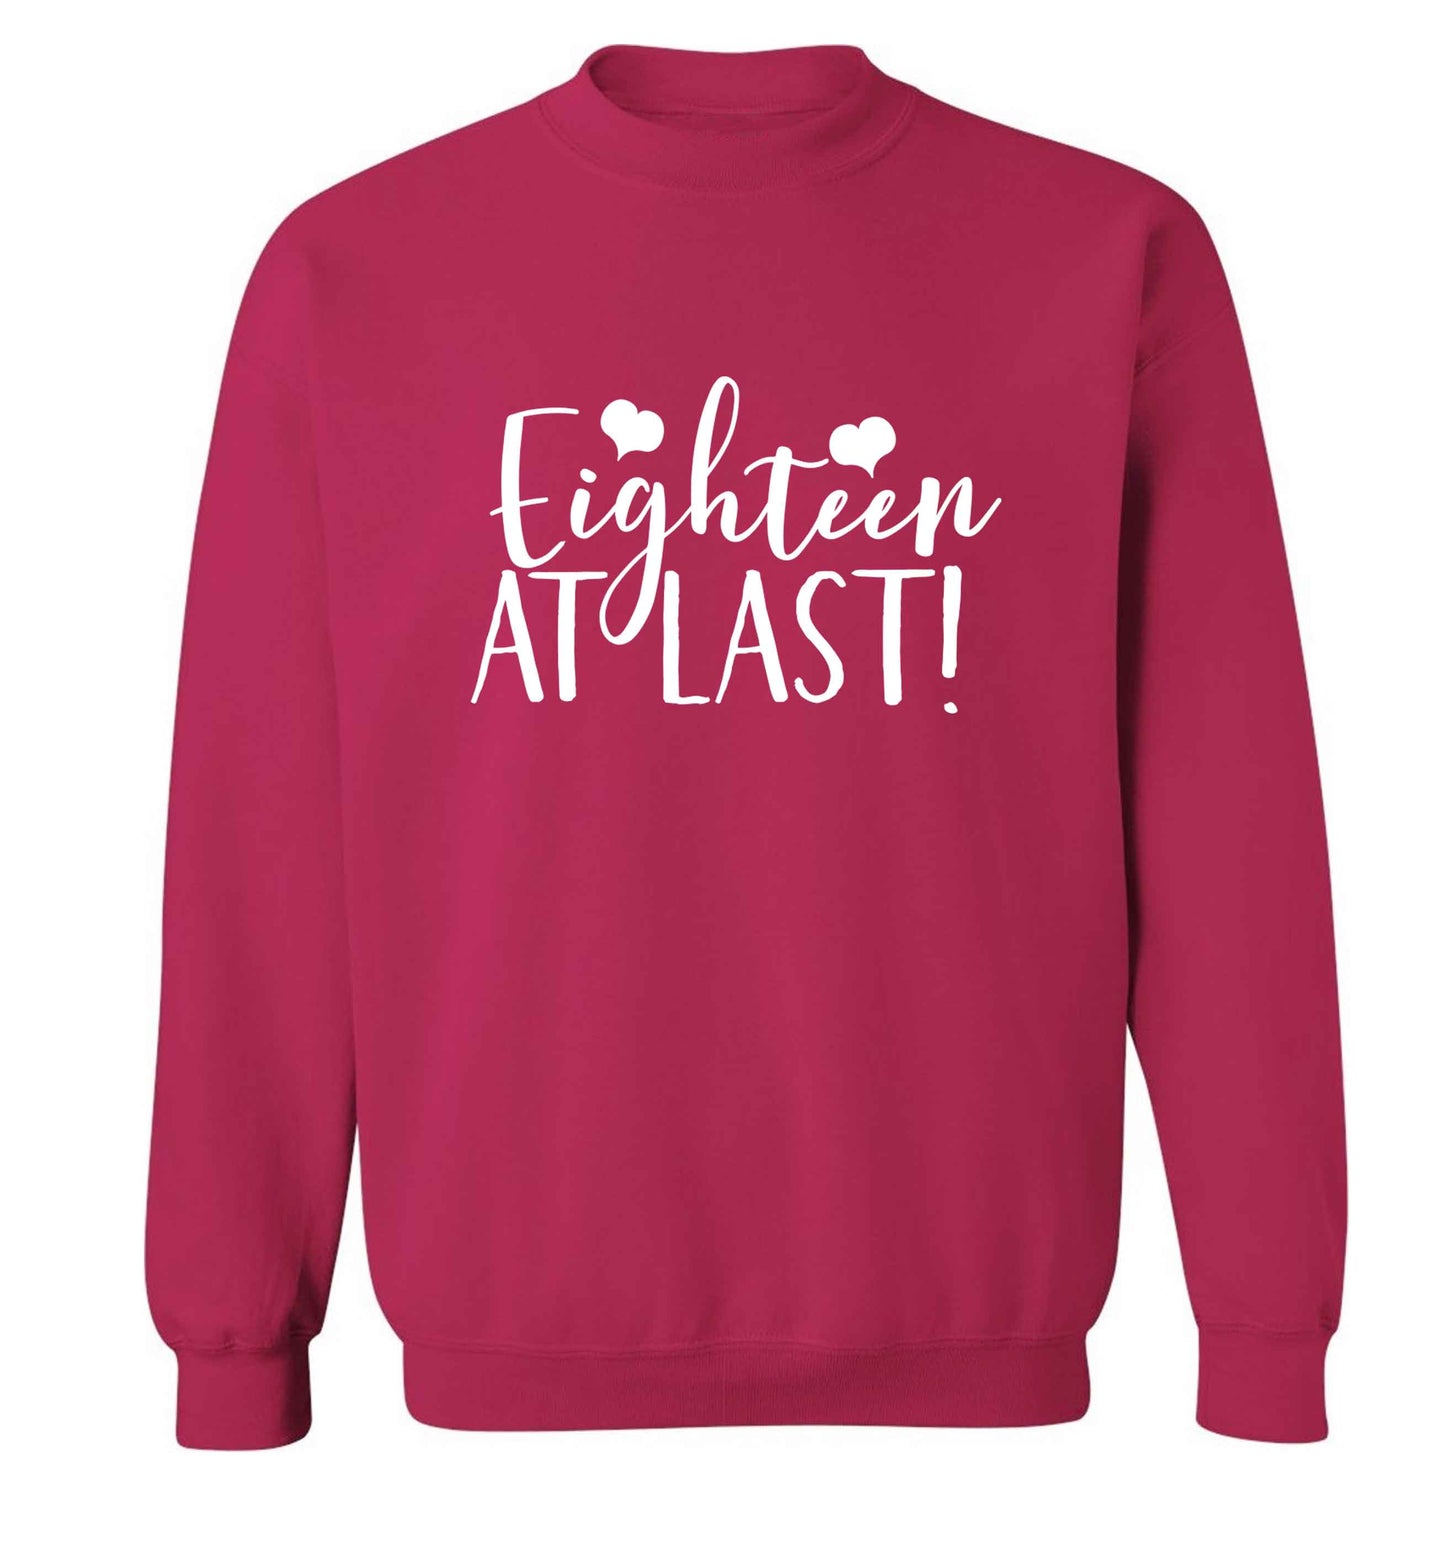 Eighteen at last!adult's unisex pink sweater 2XL